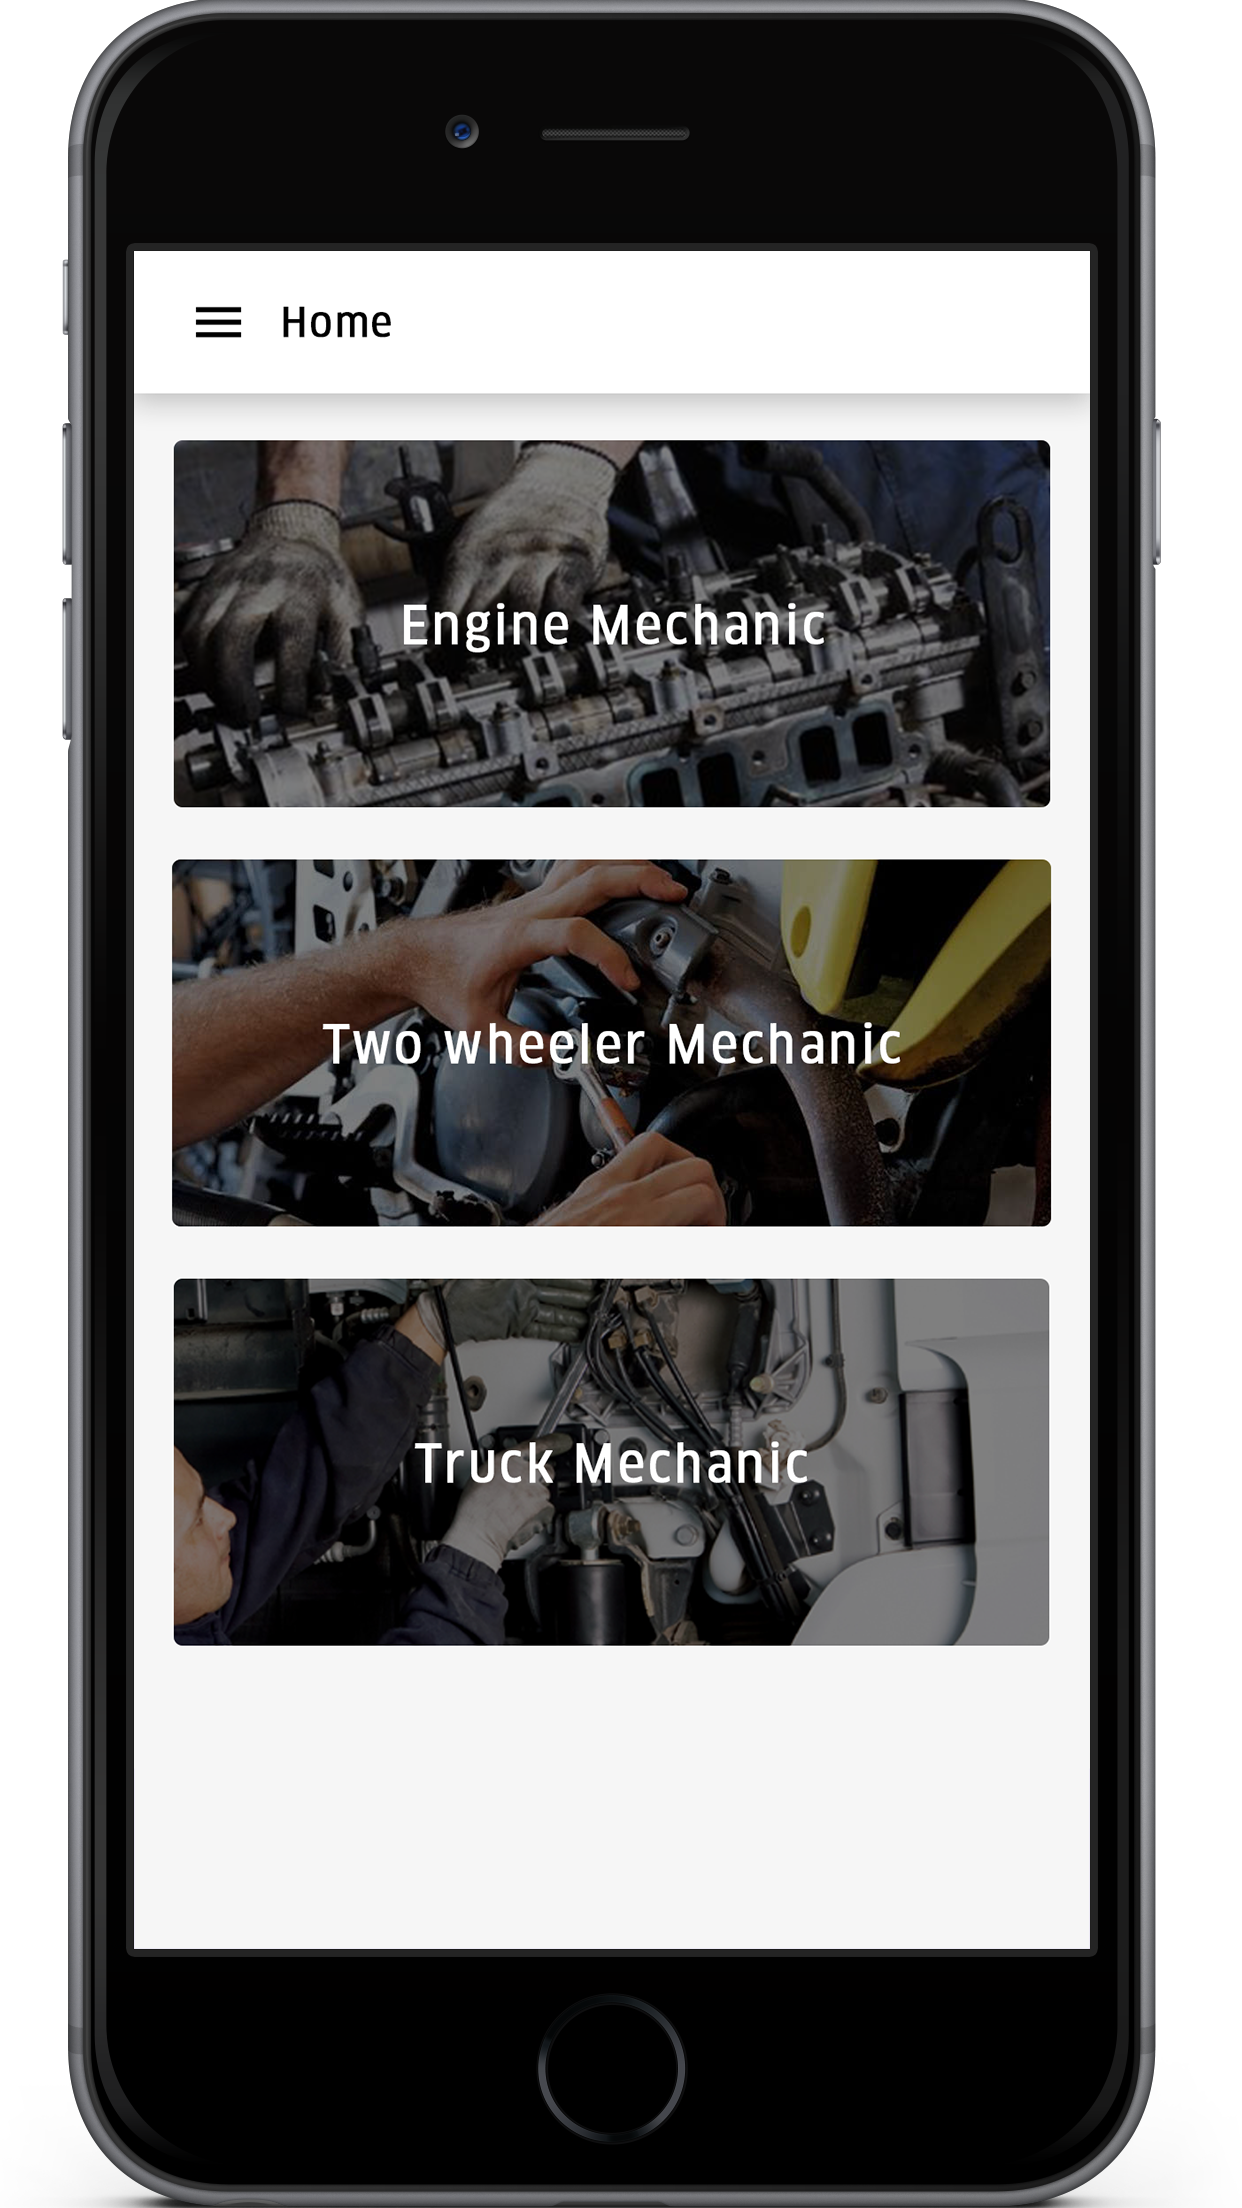 on demand mechanics services app